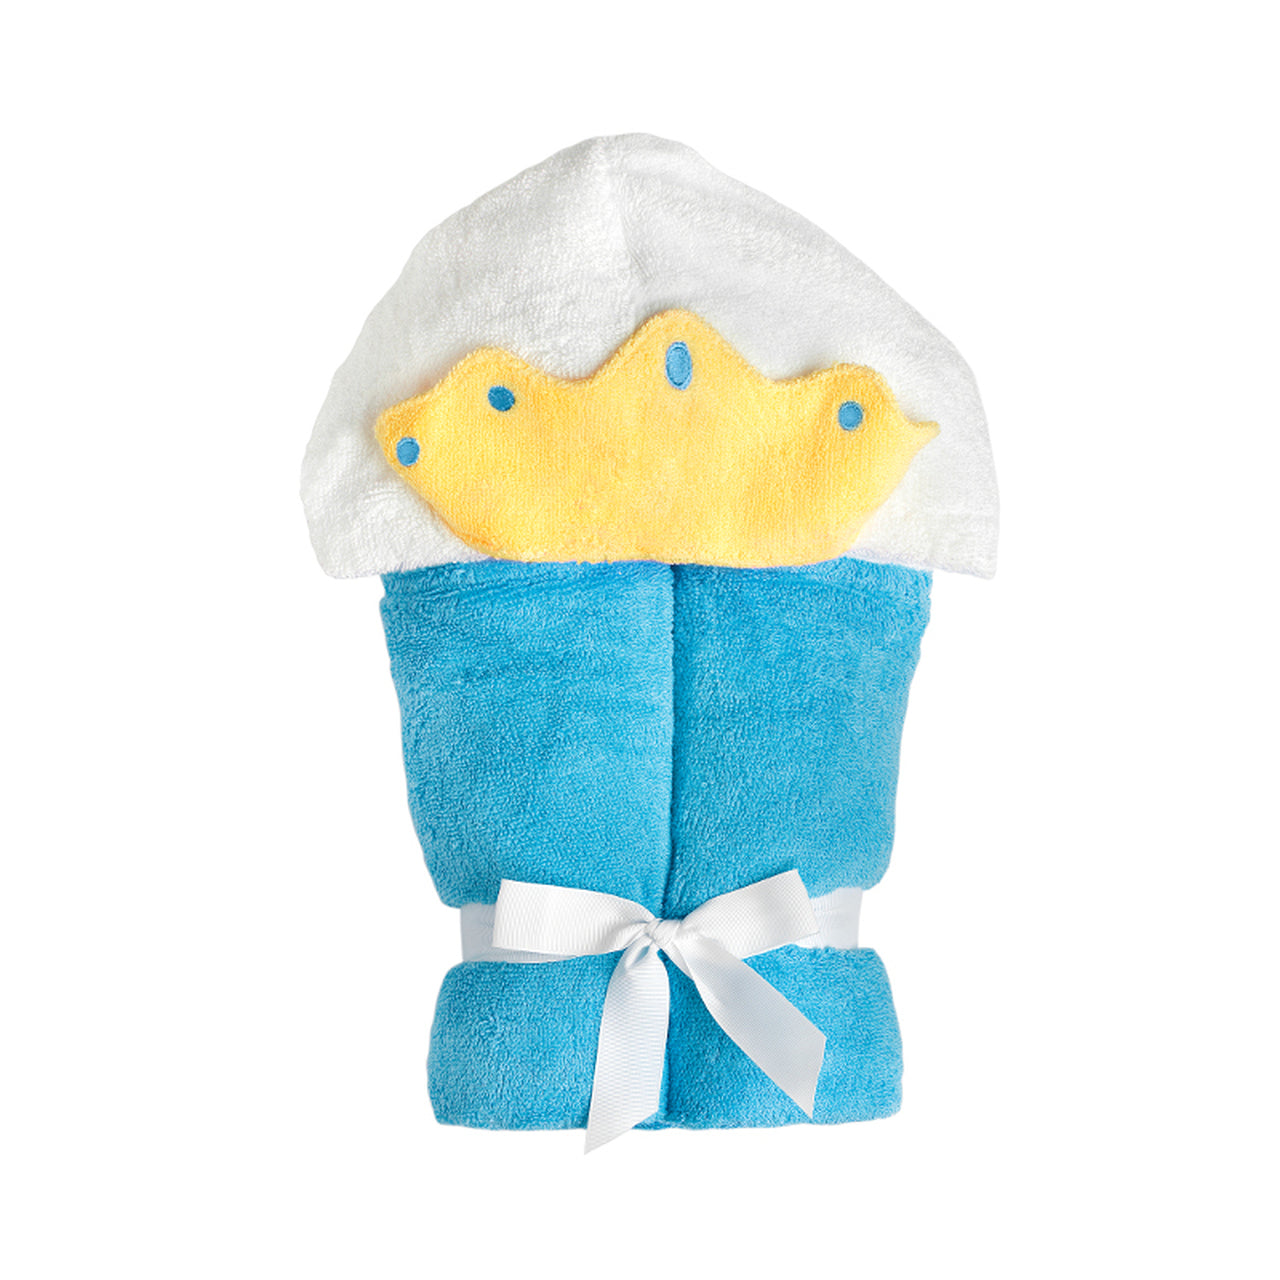 Blue Princess Hooded towel